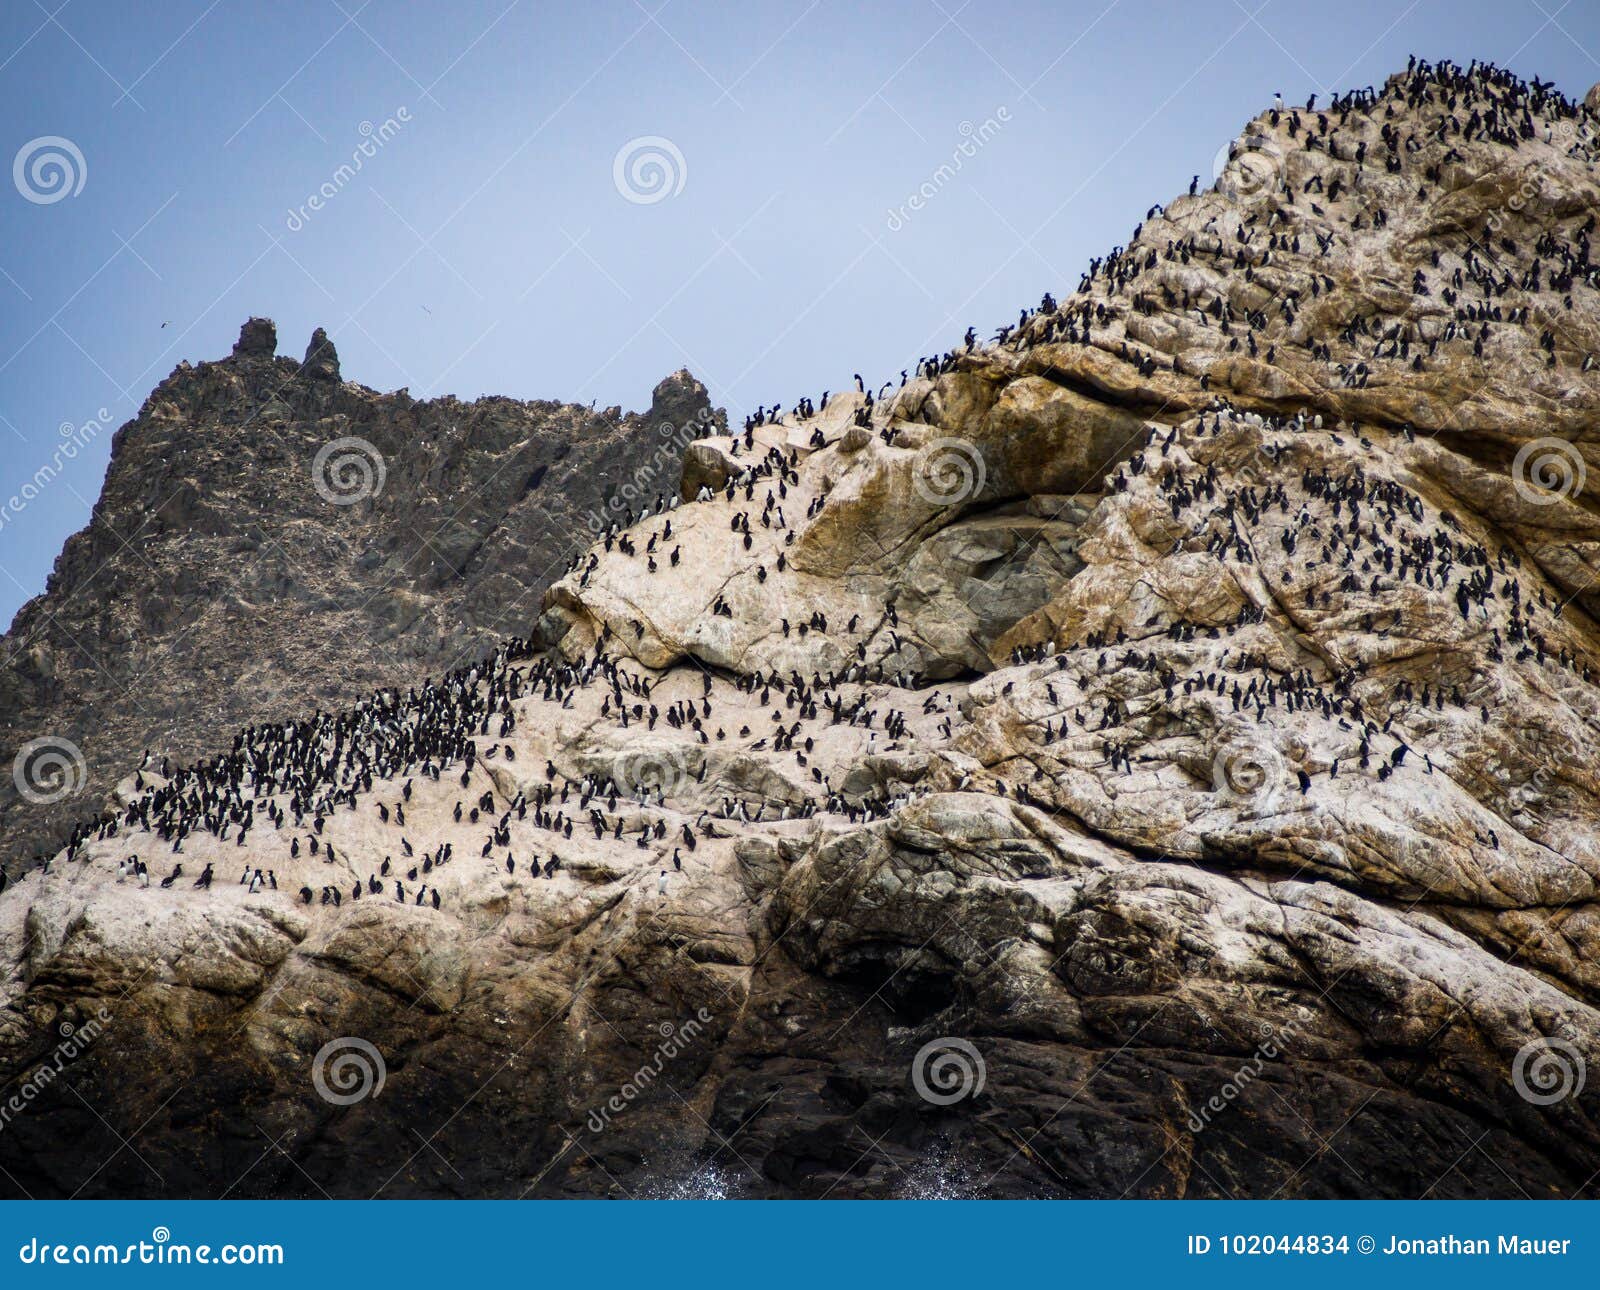 farallon island rock with birds